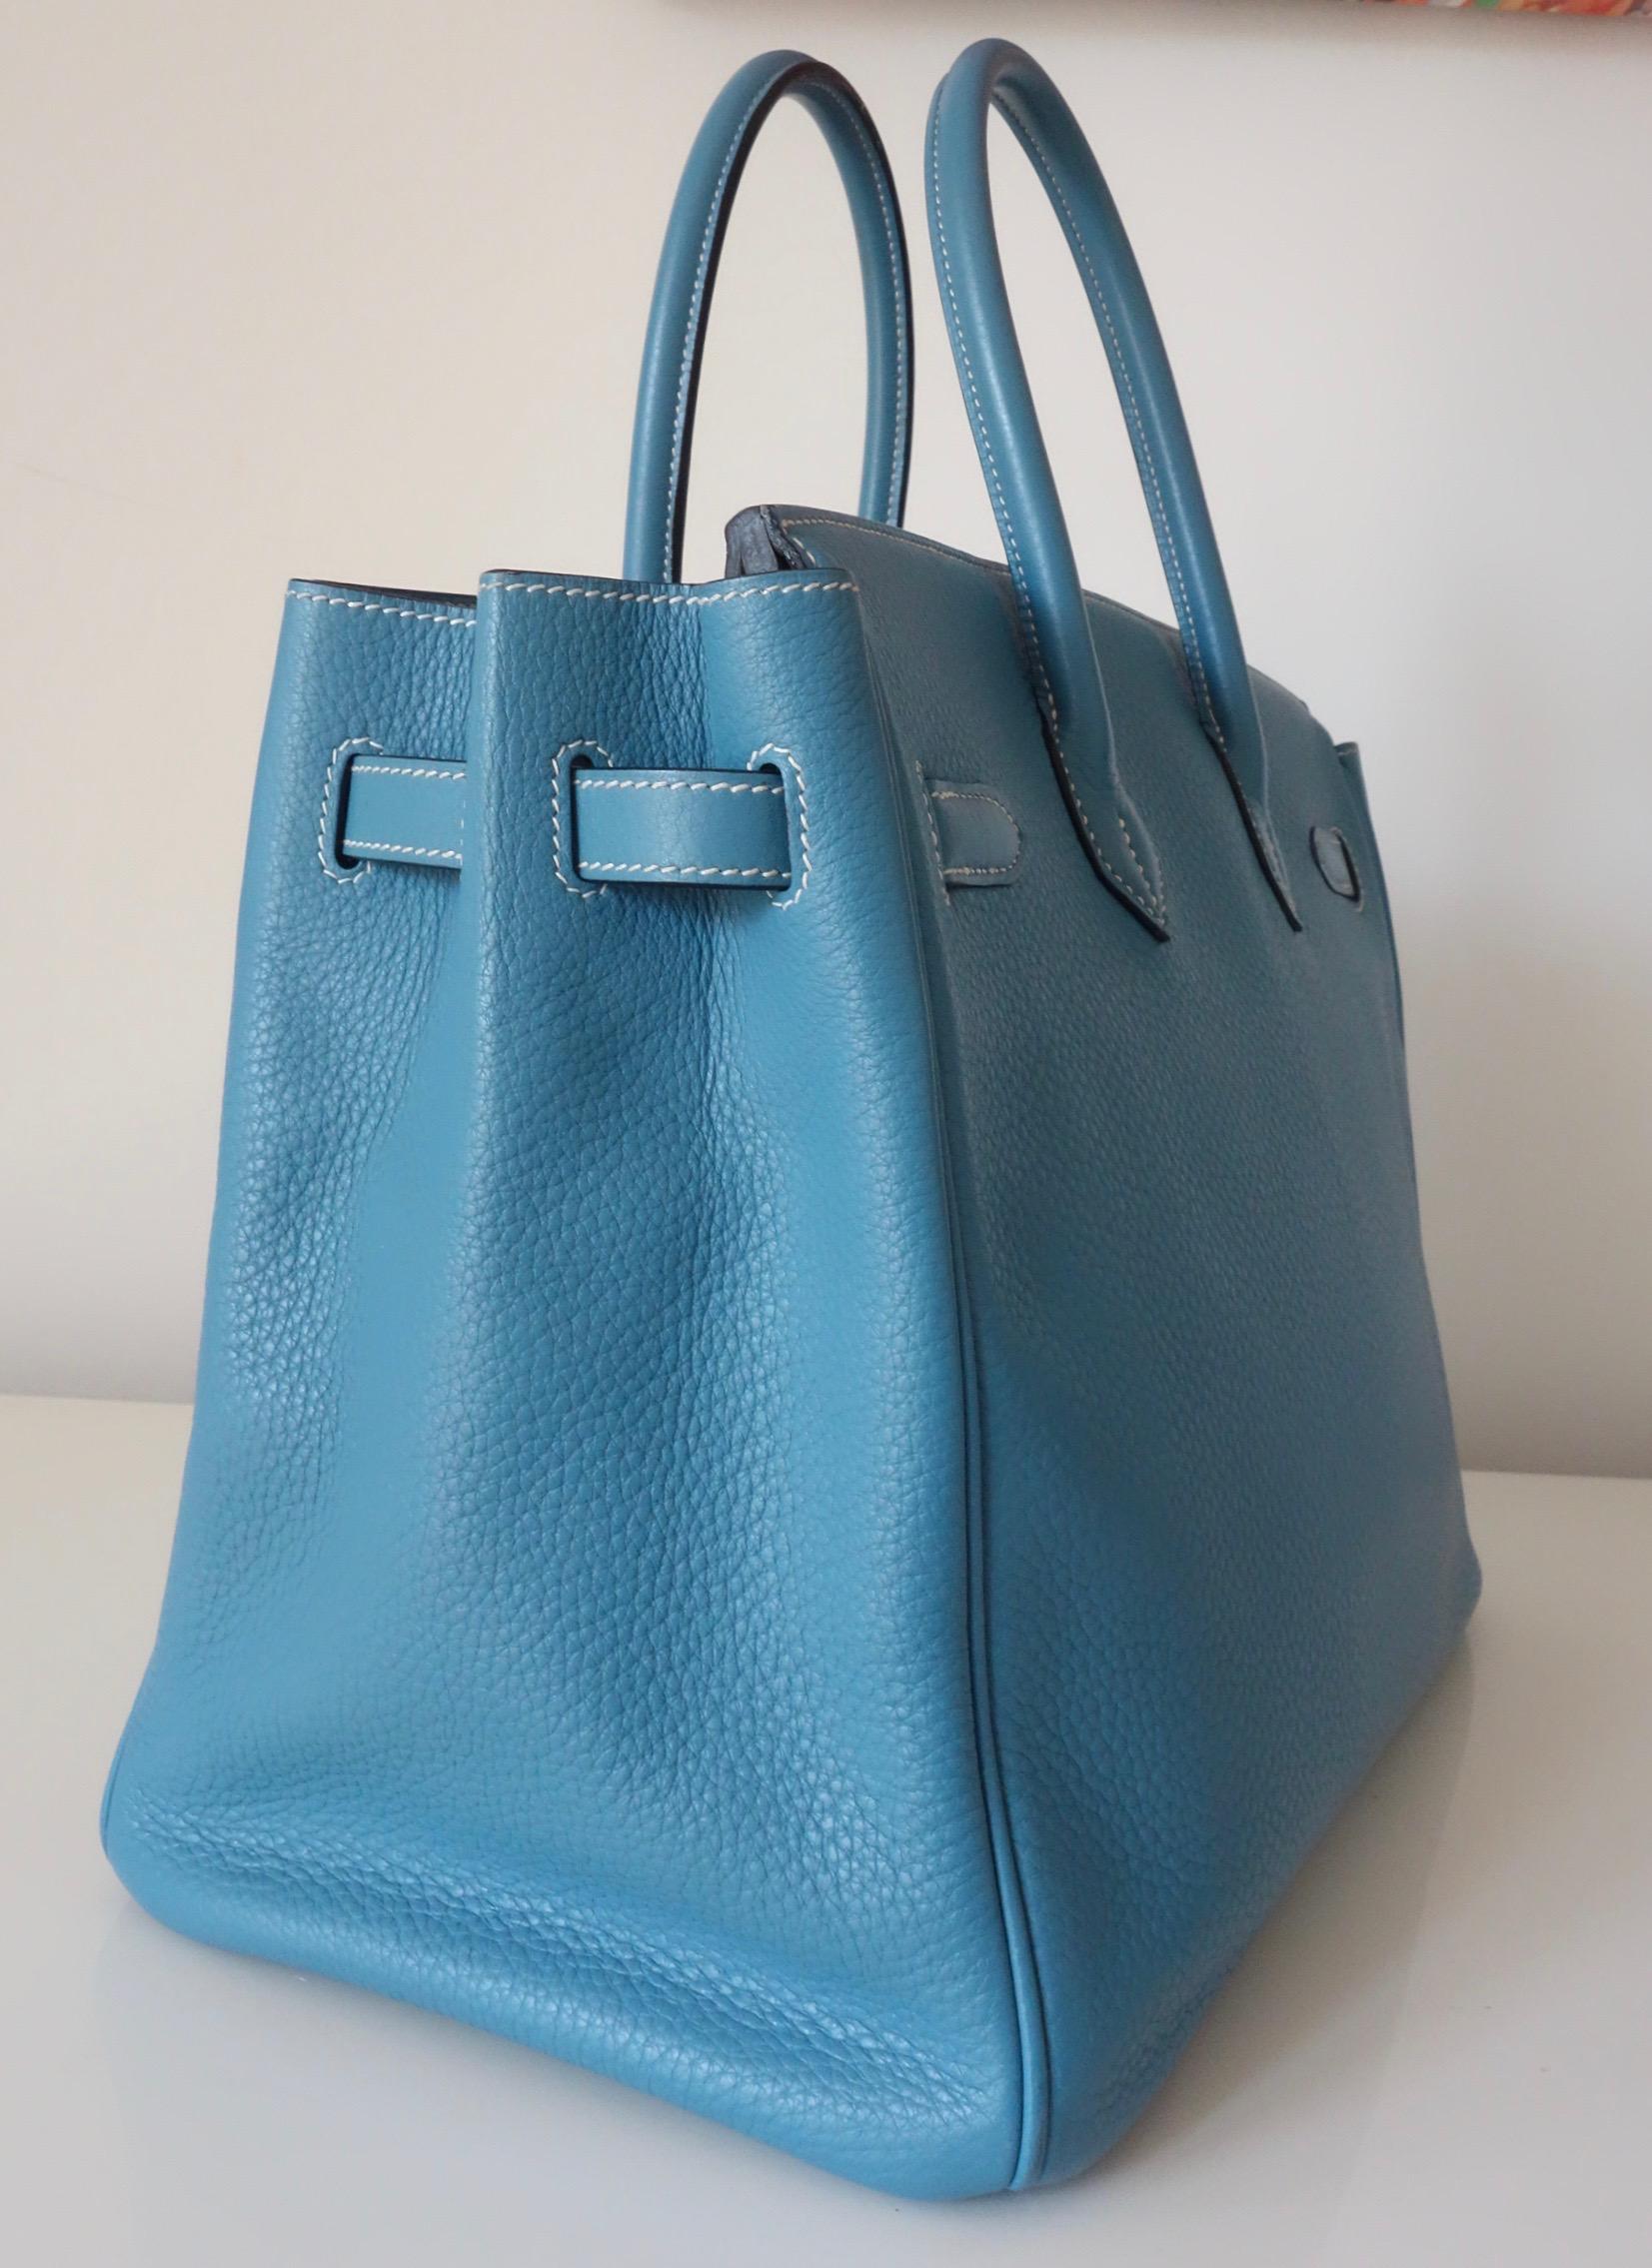 Hermès Taurillon Clemence Bleu Jean PHW 35 cm Birkin Top Handle Bag 4